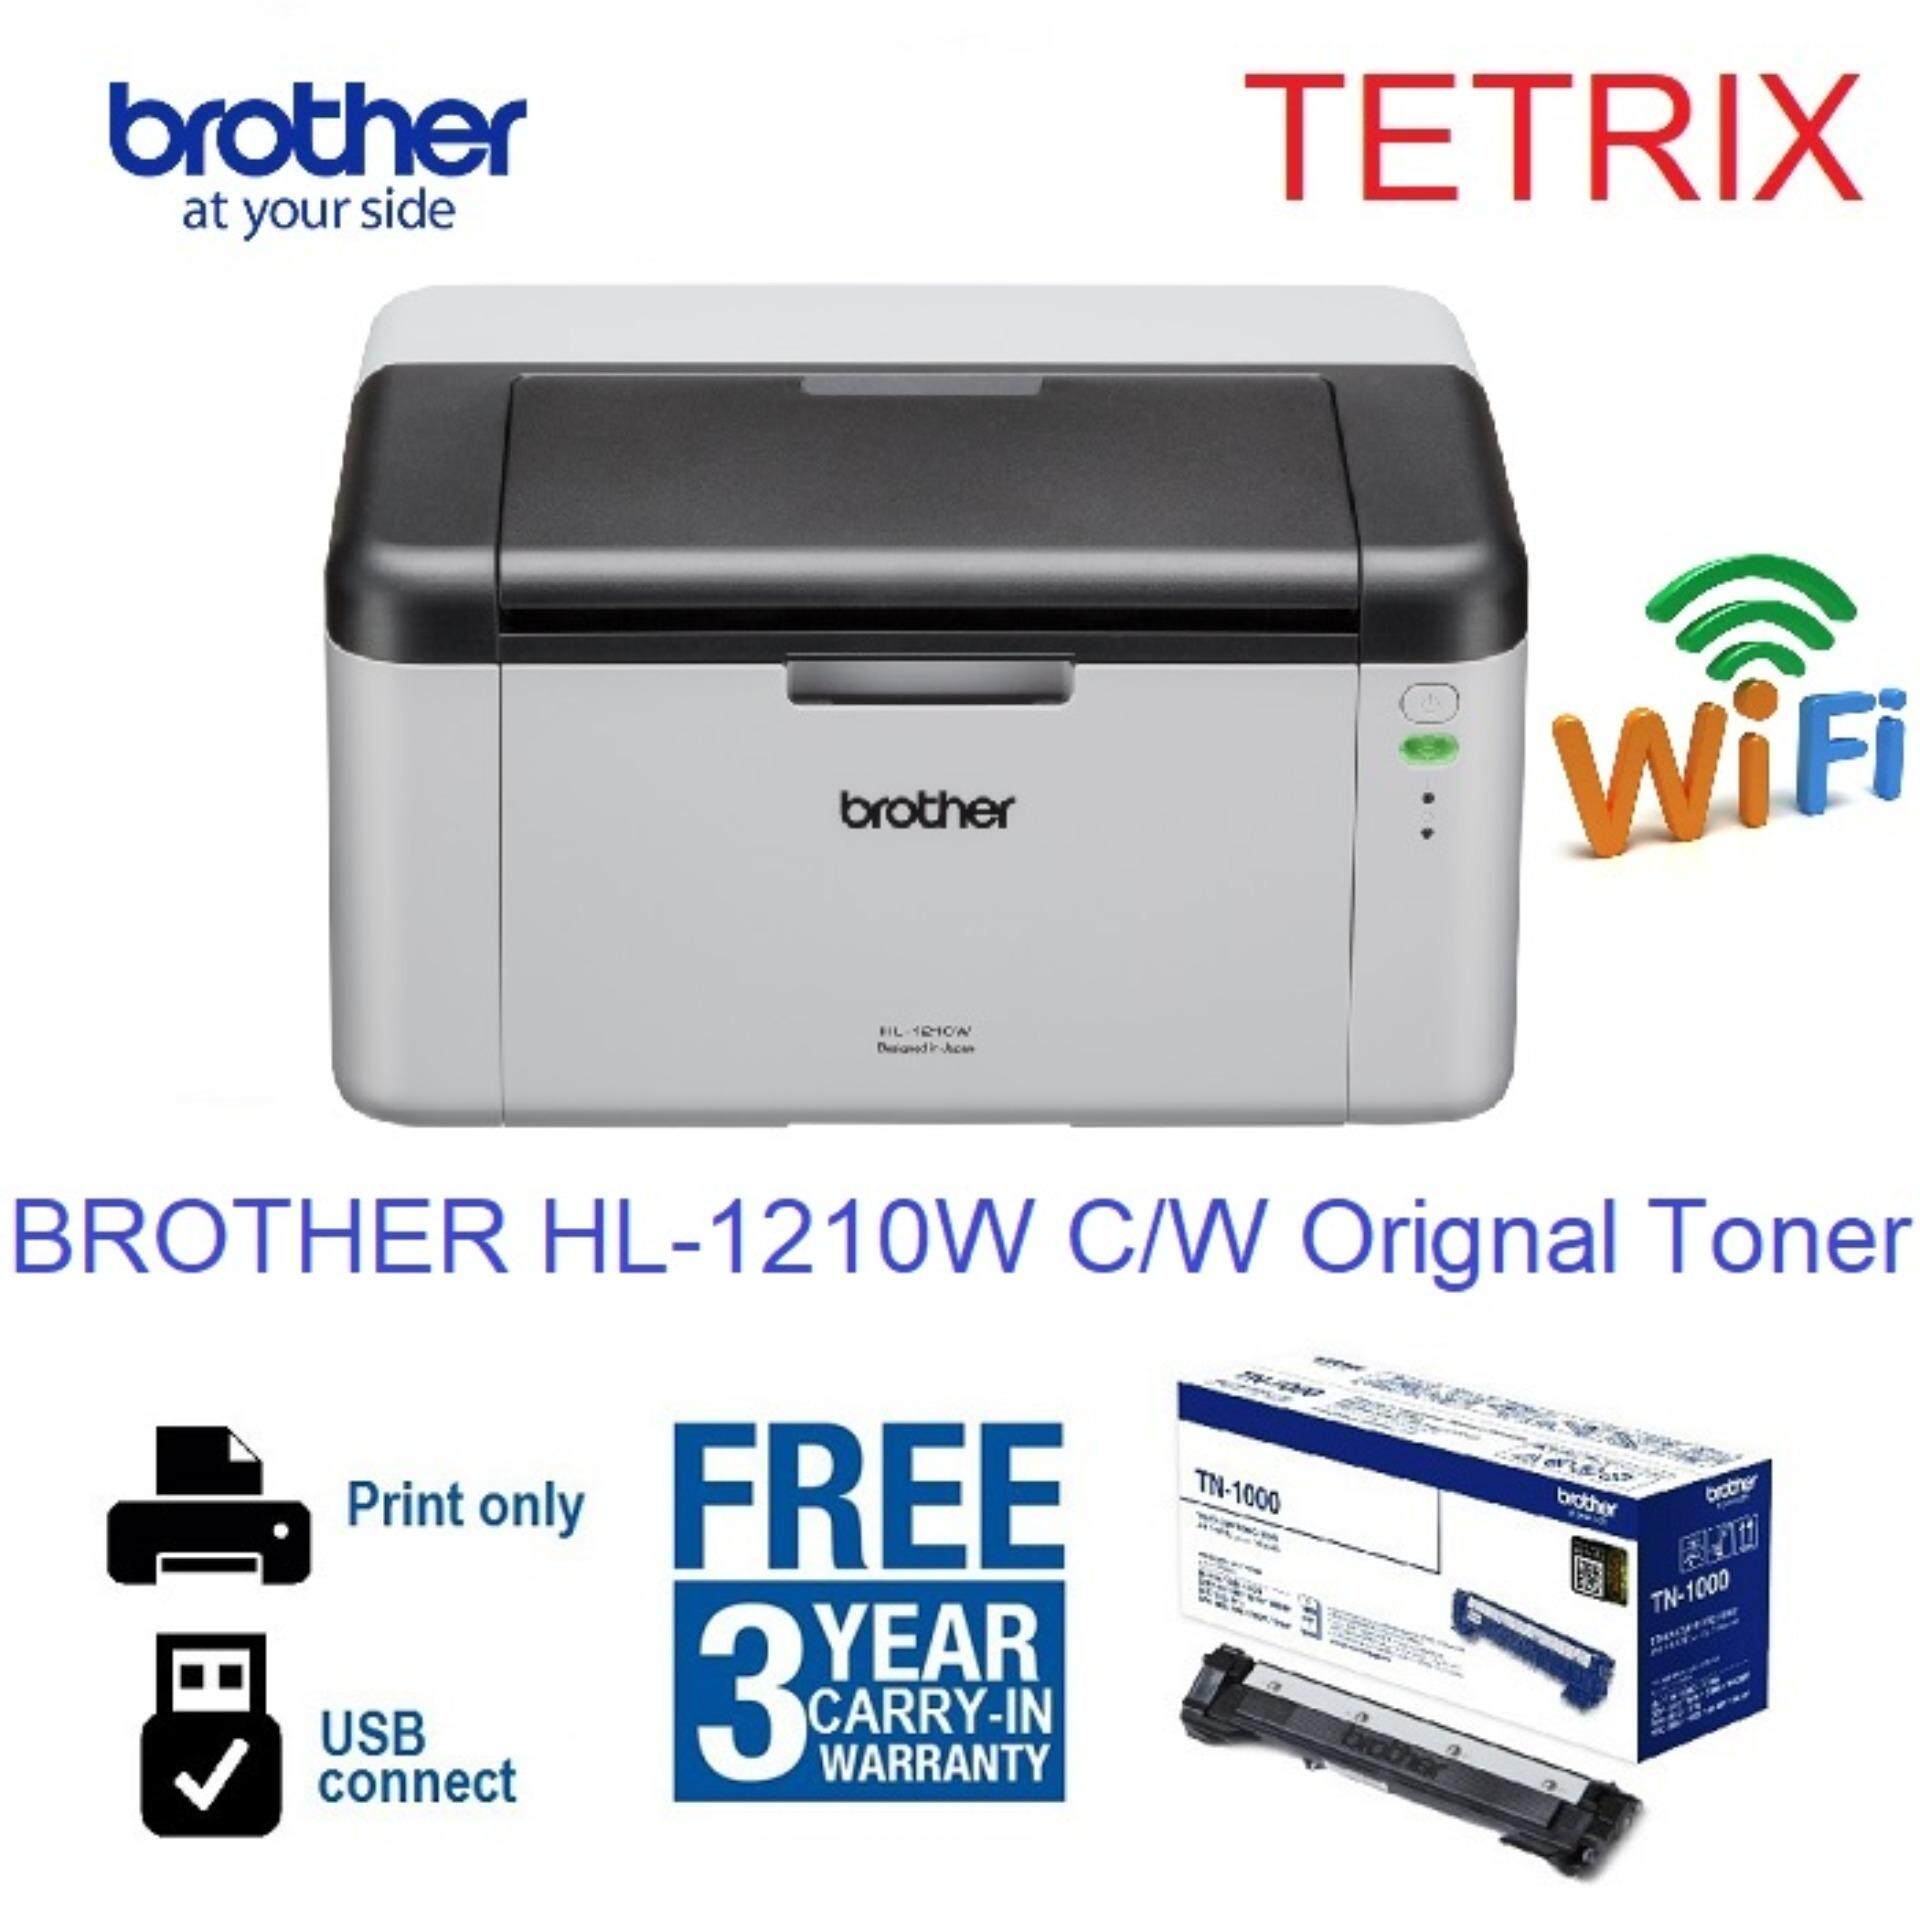 Brother hl 1210w. Принтер brother 1210w. Hl-1210w Series. Принтер brother с WIFI hl1210w для дома.